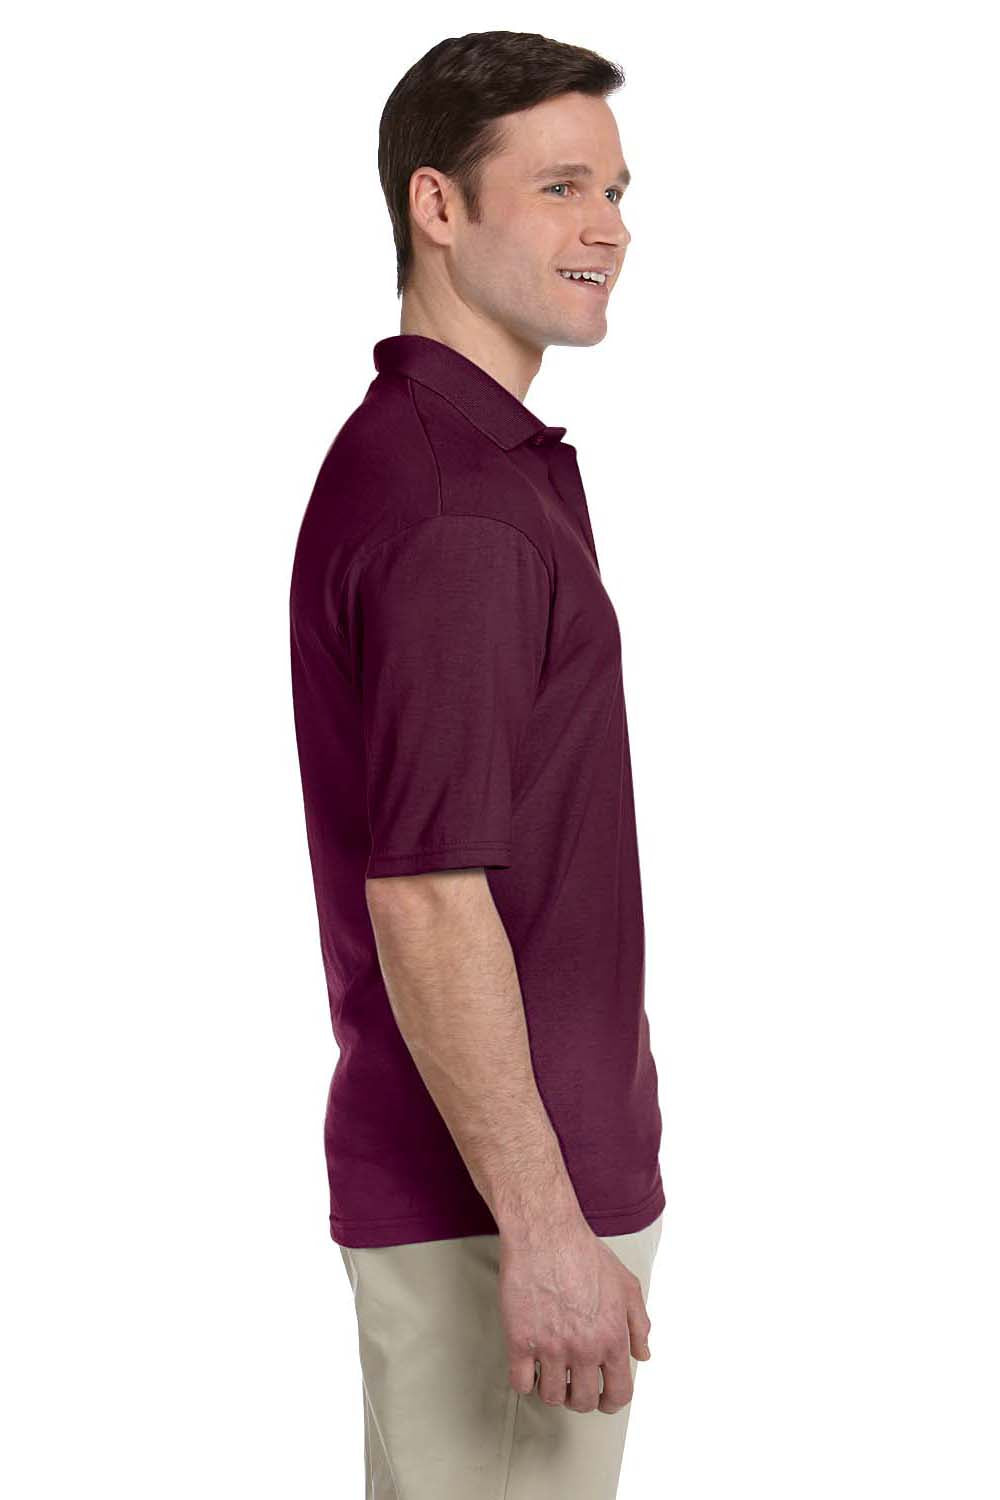 Jerzees 436P Mens SpotShield Stain Resistant Short Sleeve Polo Shirt w/ Pocket Maroon Side